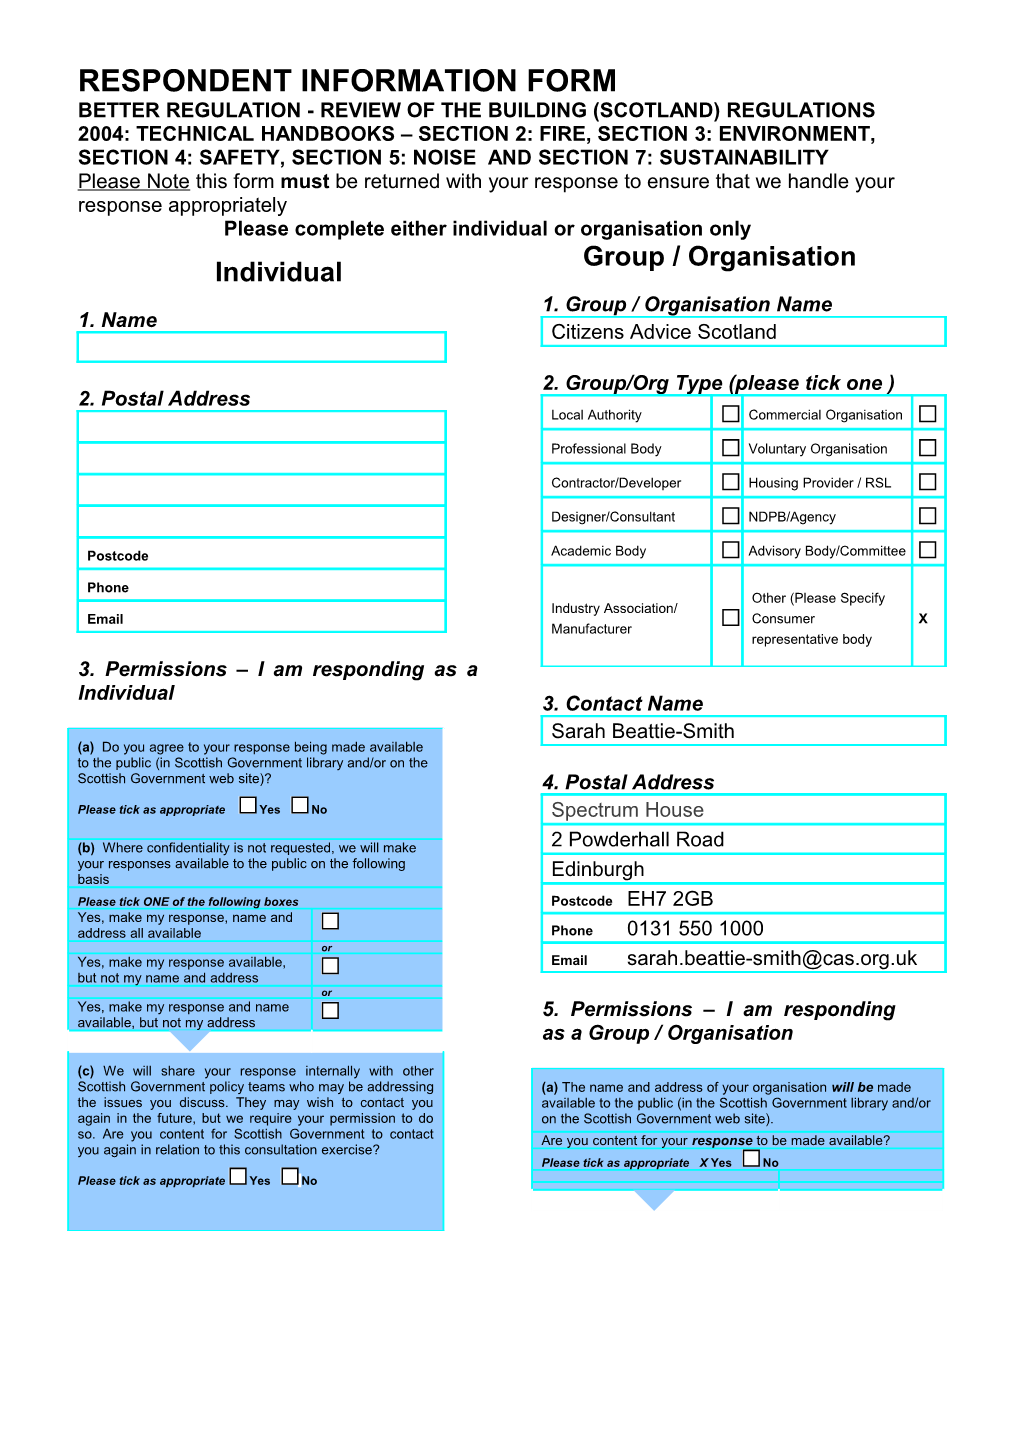 Respondent Information Form (RIF)